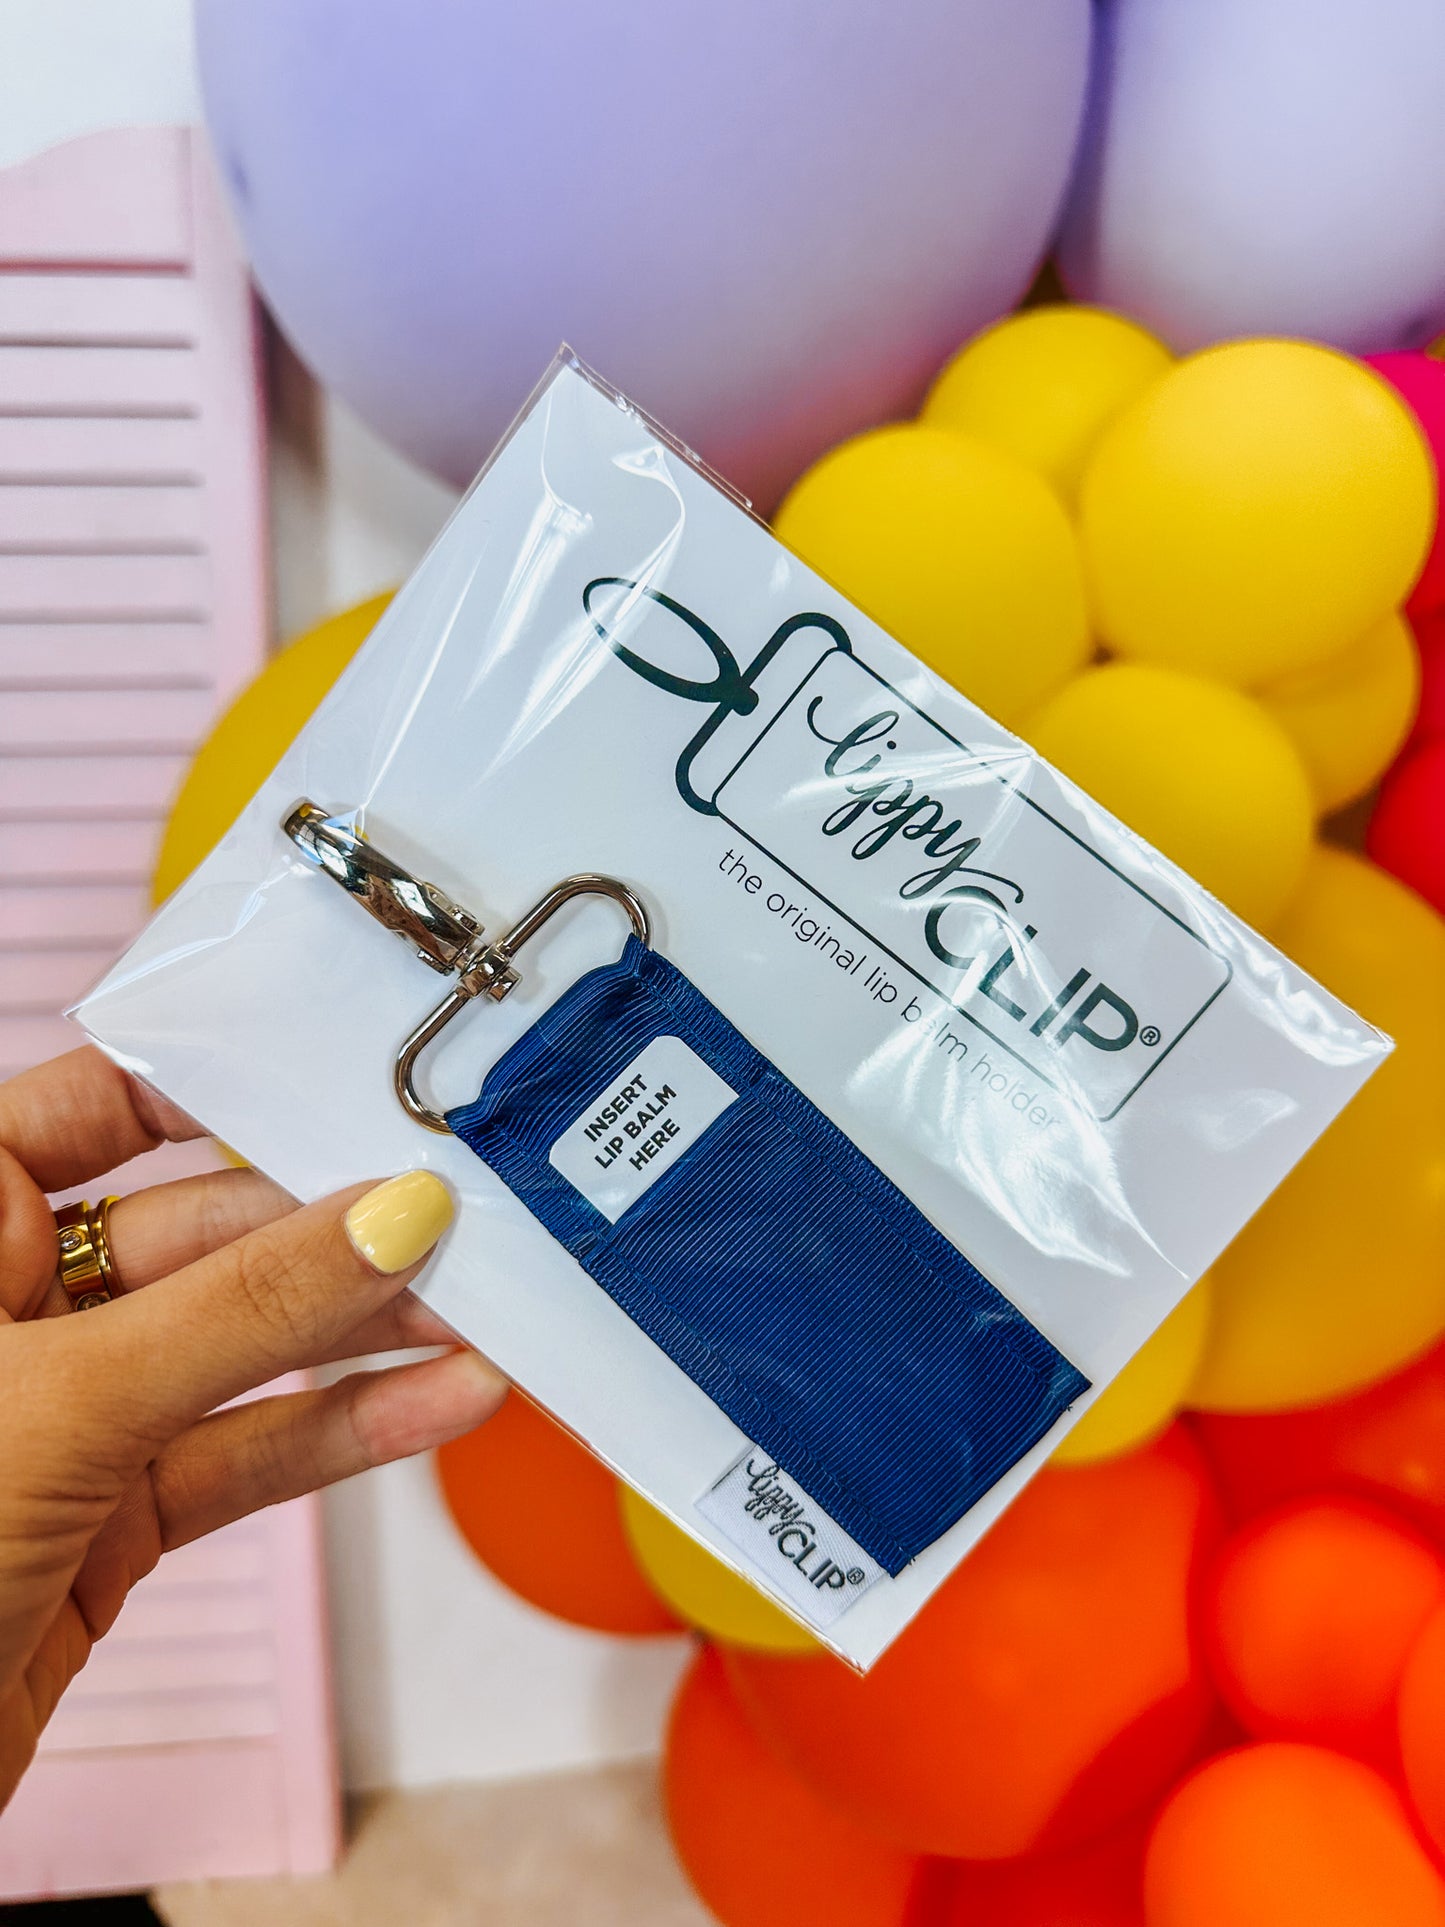 Classic Lippy Clip Lip Balm Holder Keychain- Navy